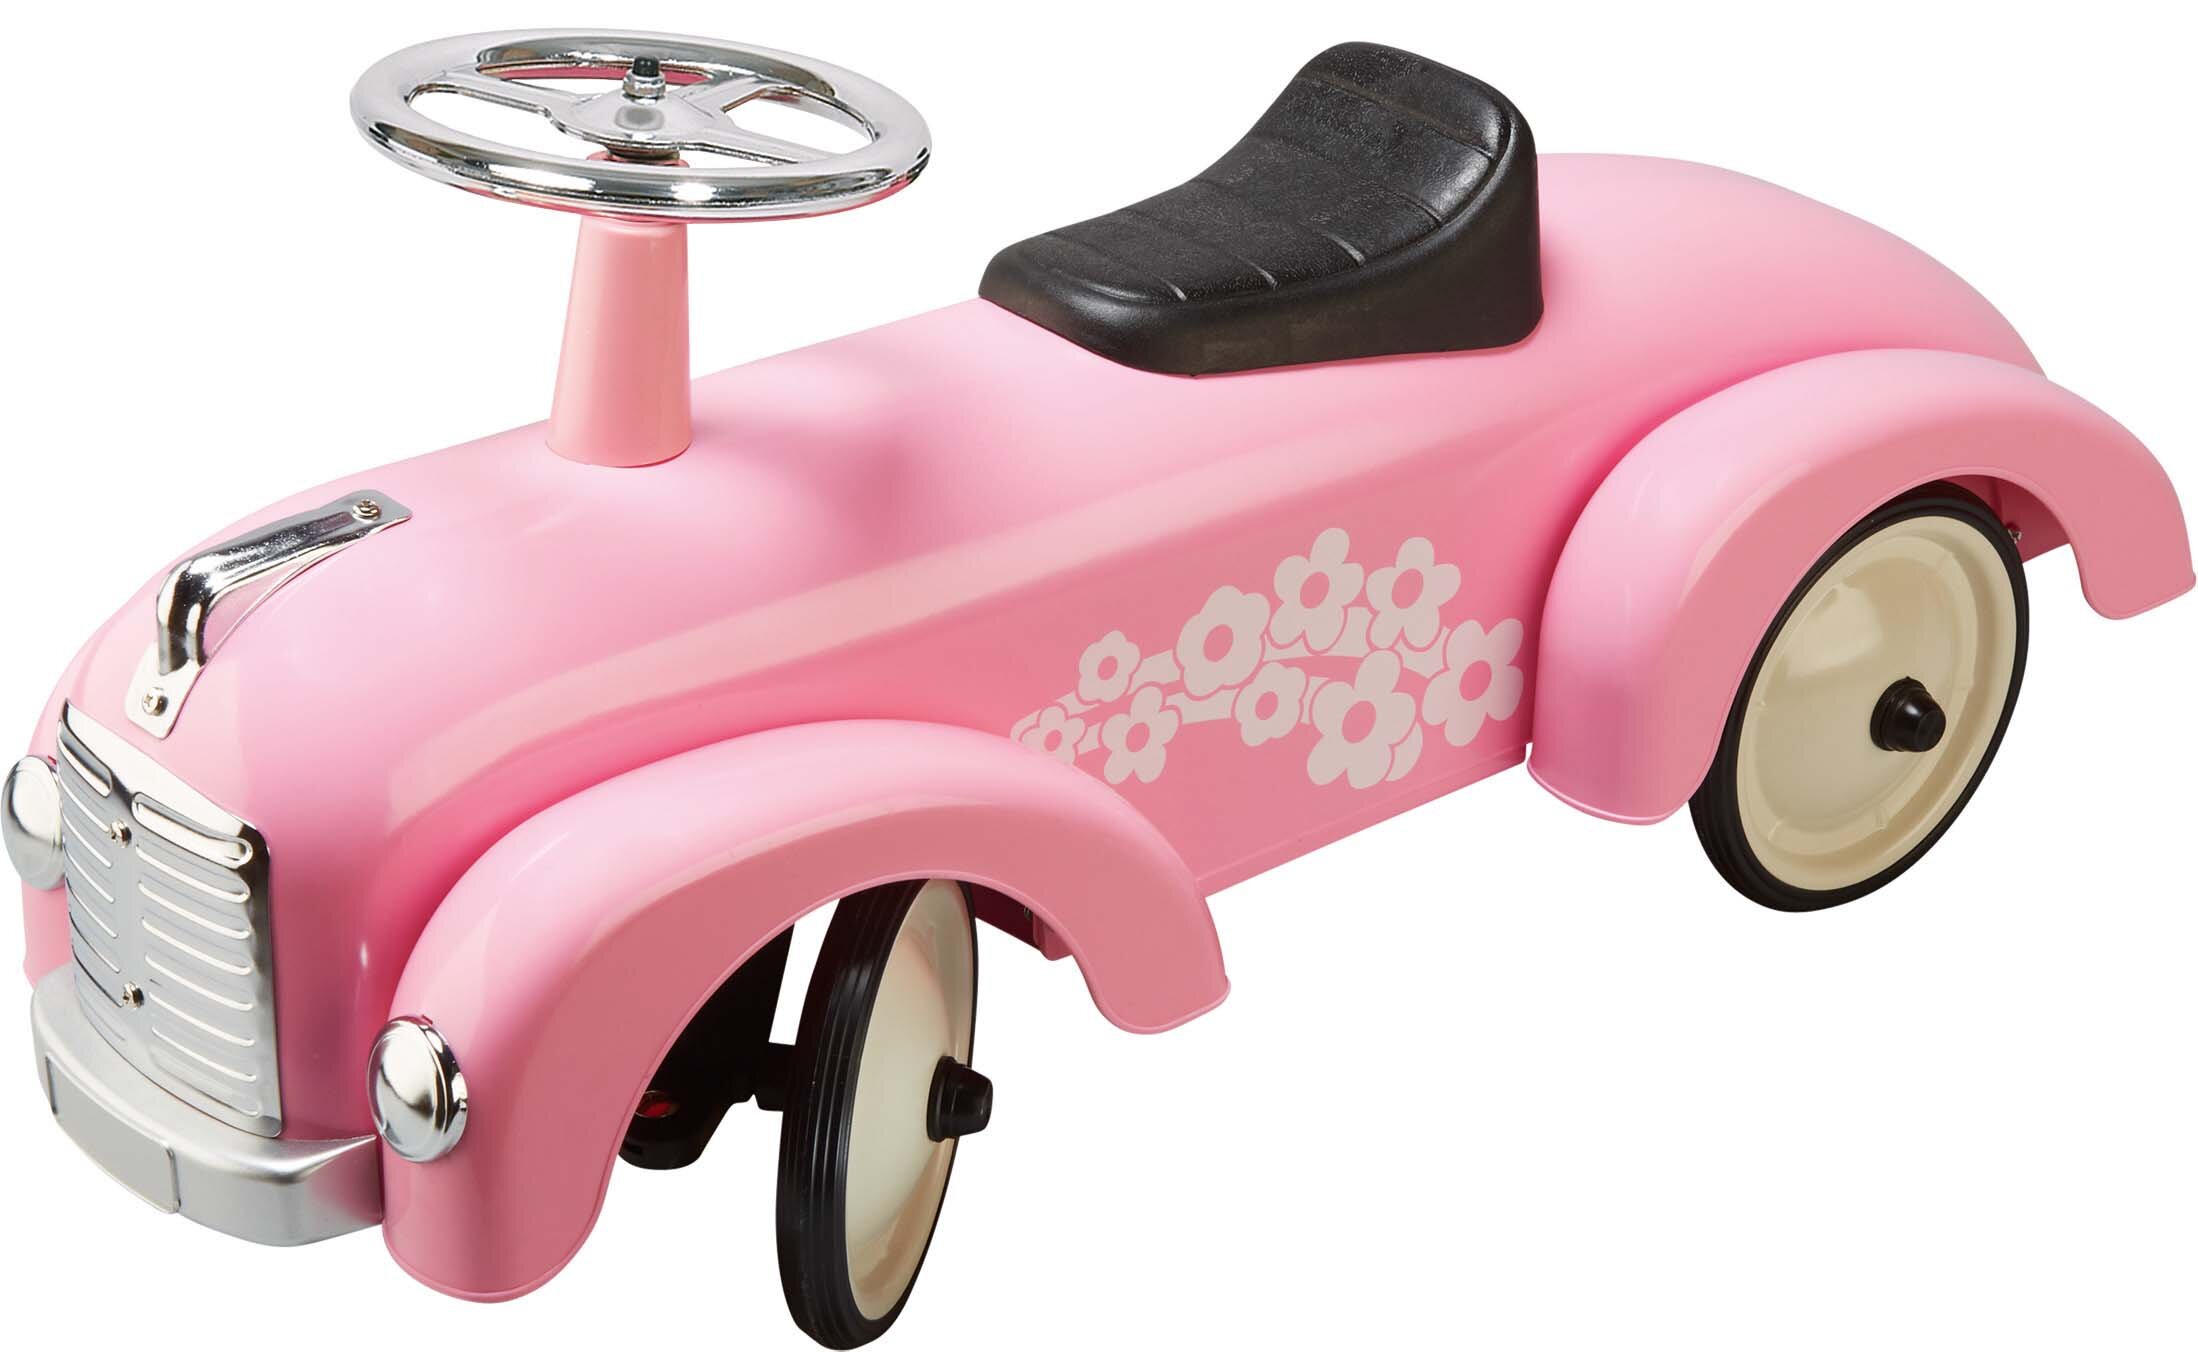 Ride-on vehicle pink